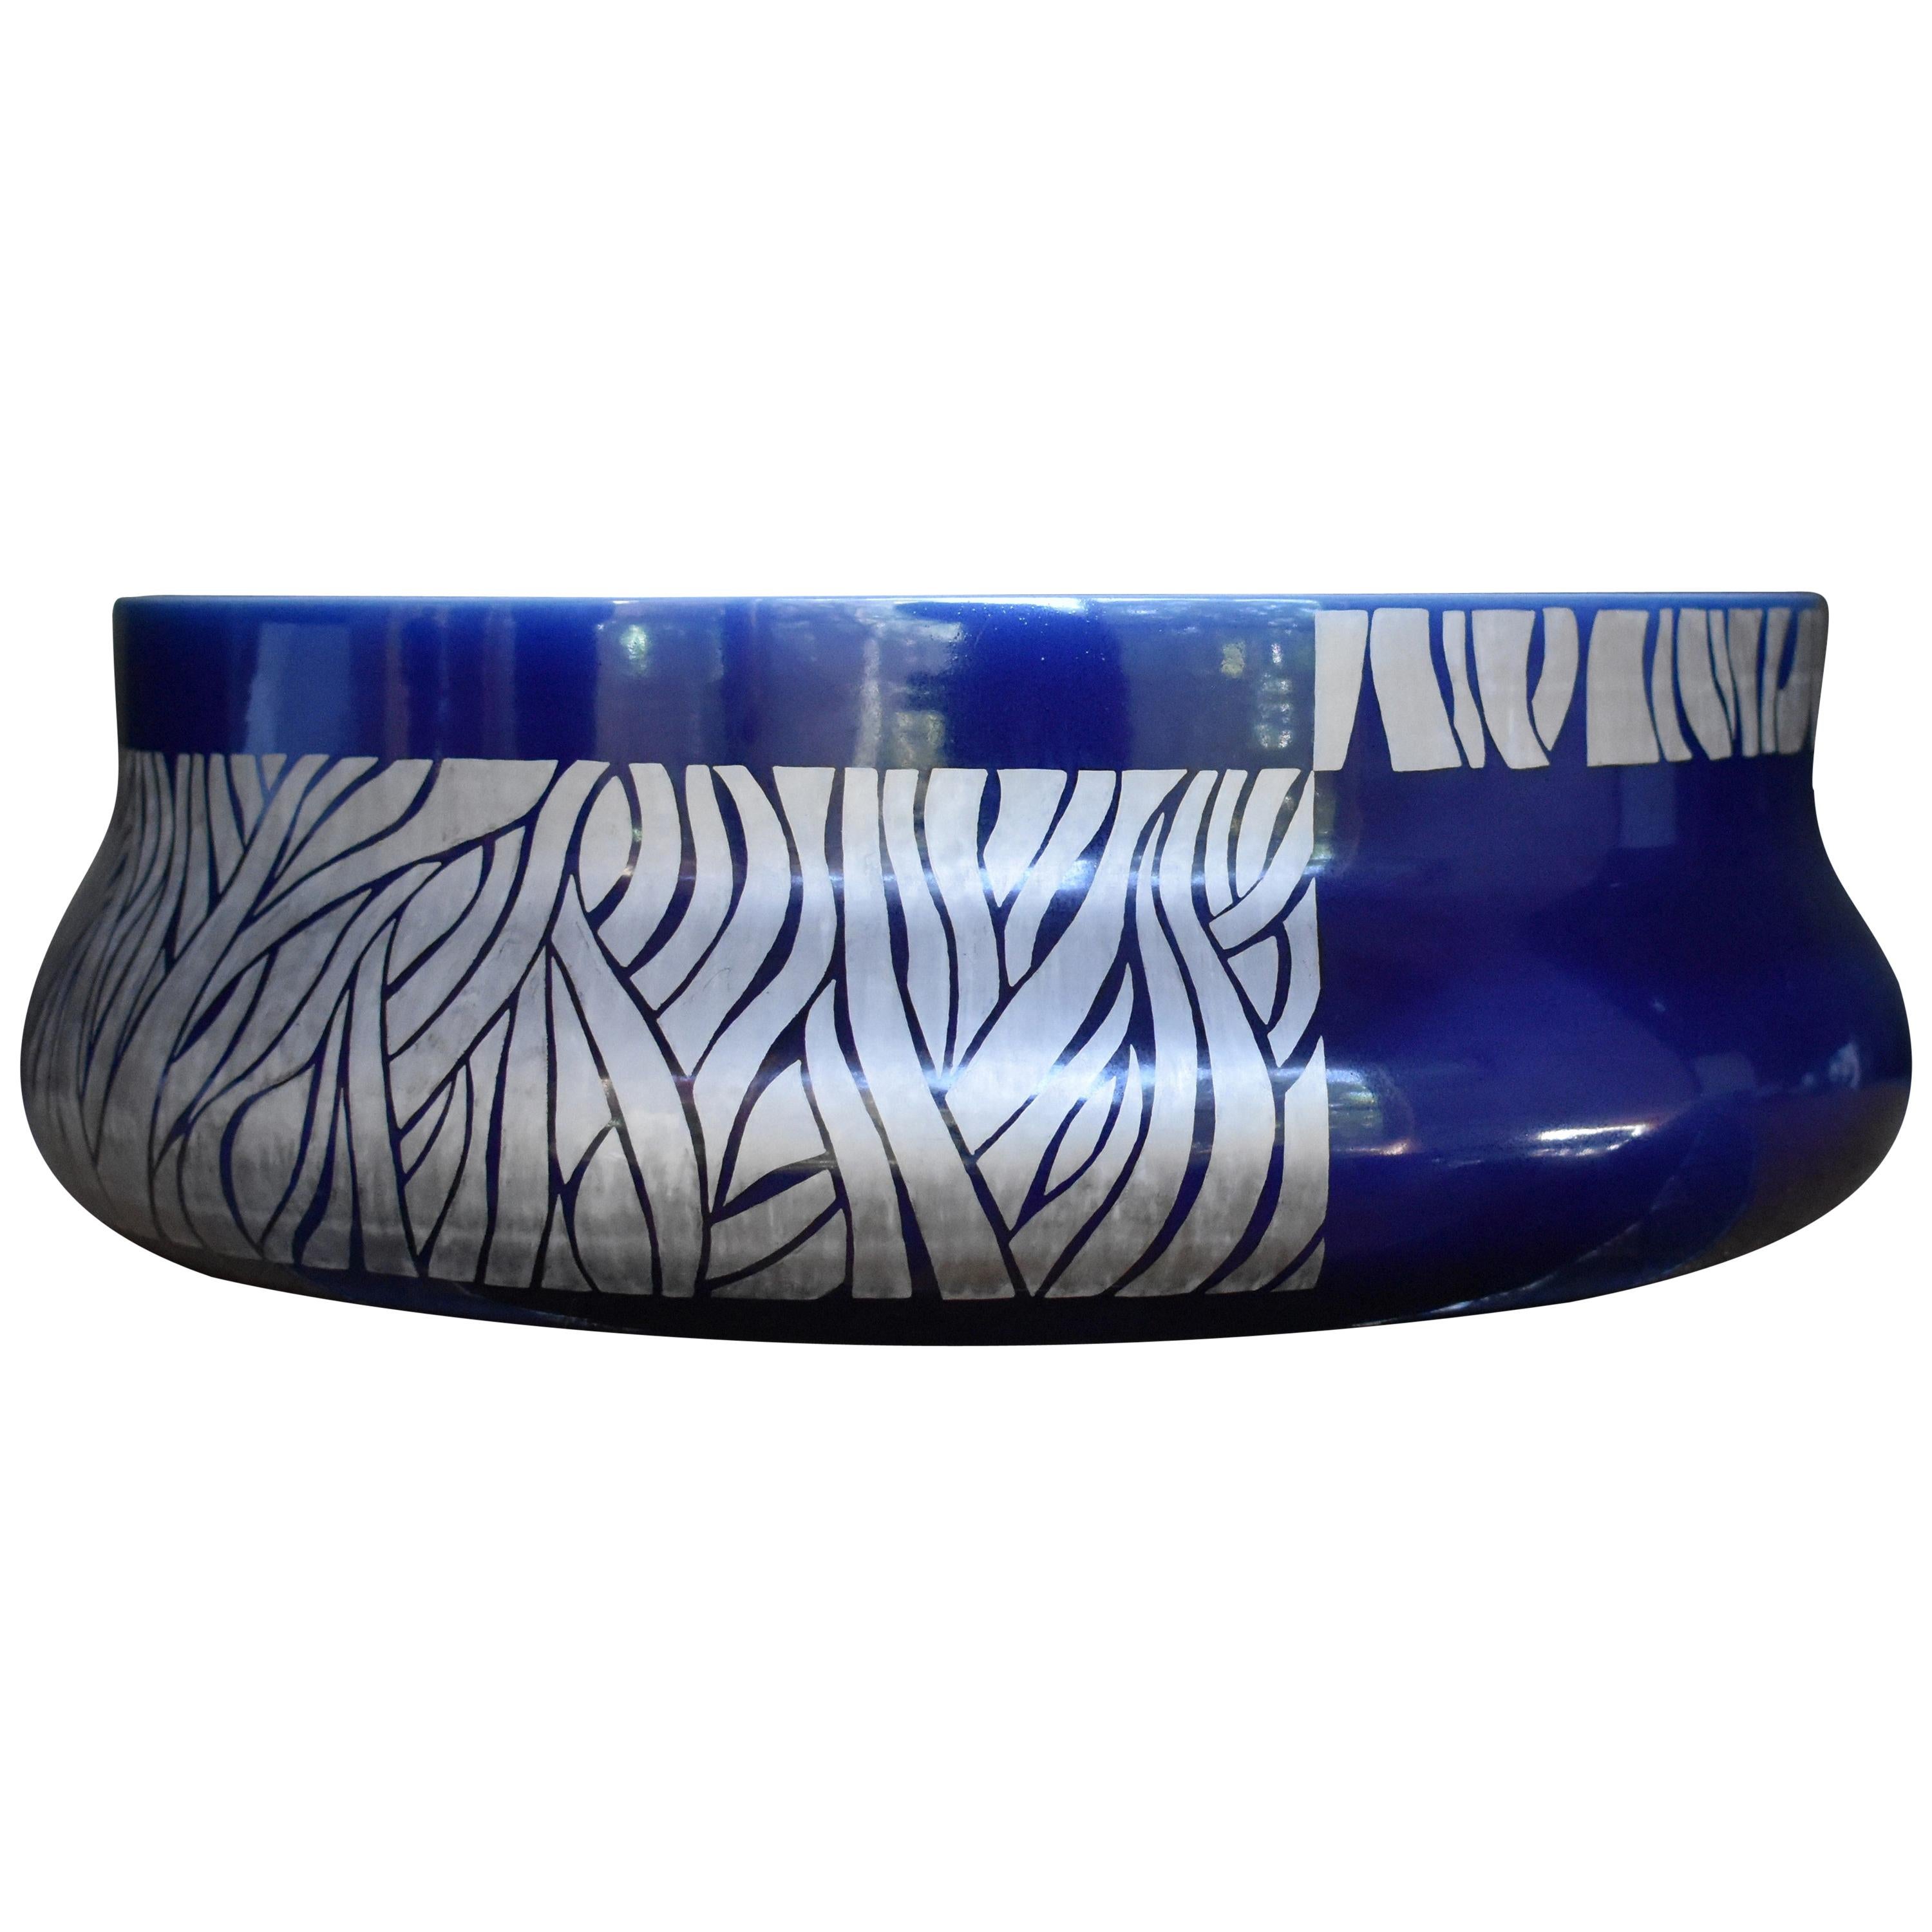 Japanese Blue Platinum Porcelain Vase by Master Artist, 2